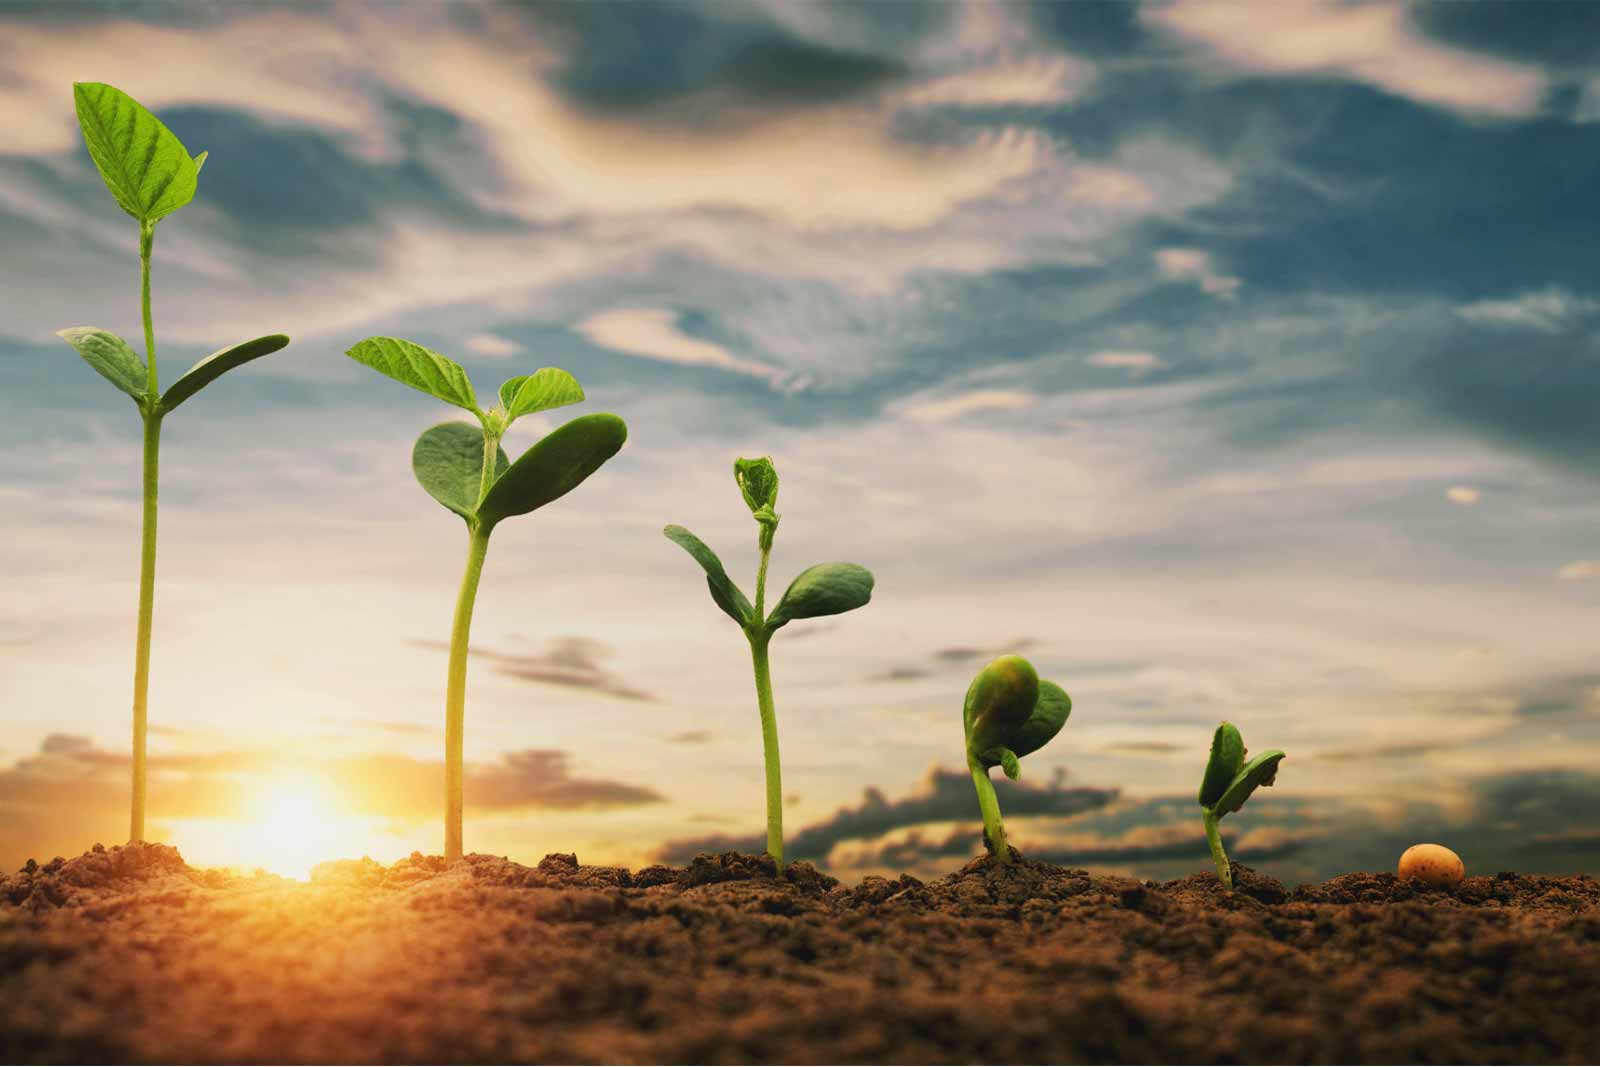 Plant Growth Regulators & Bio Stimulants